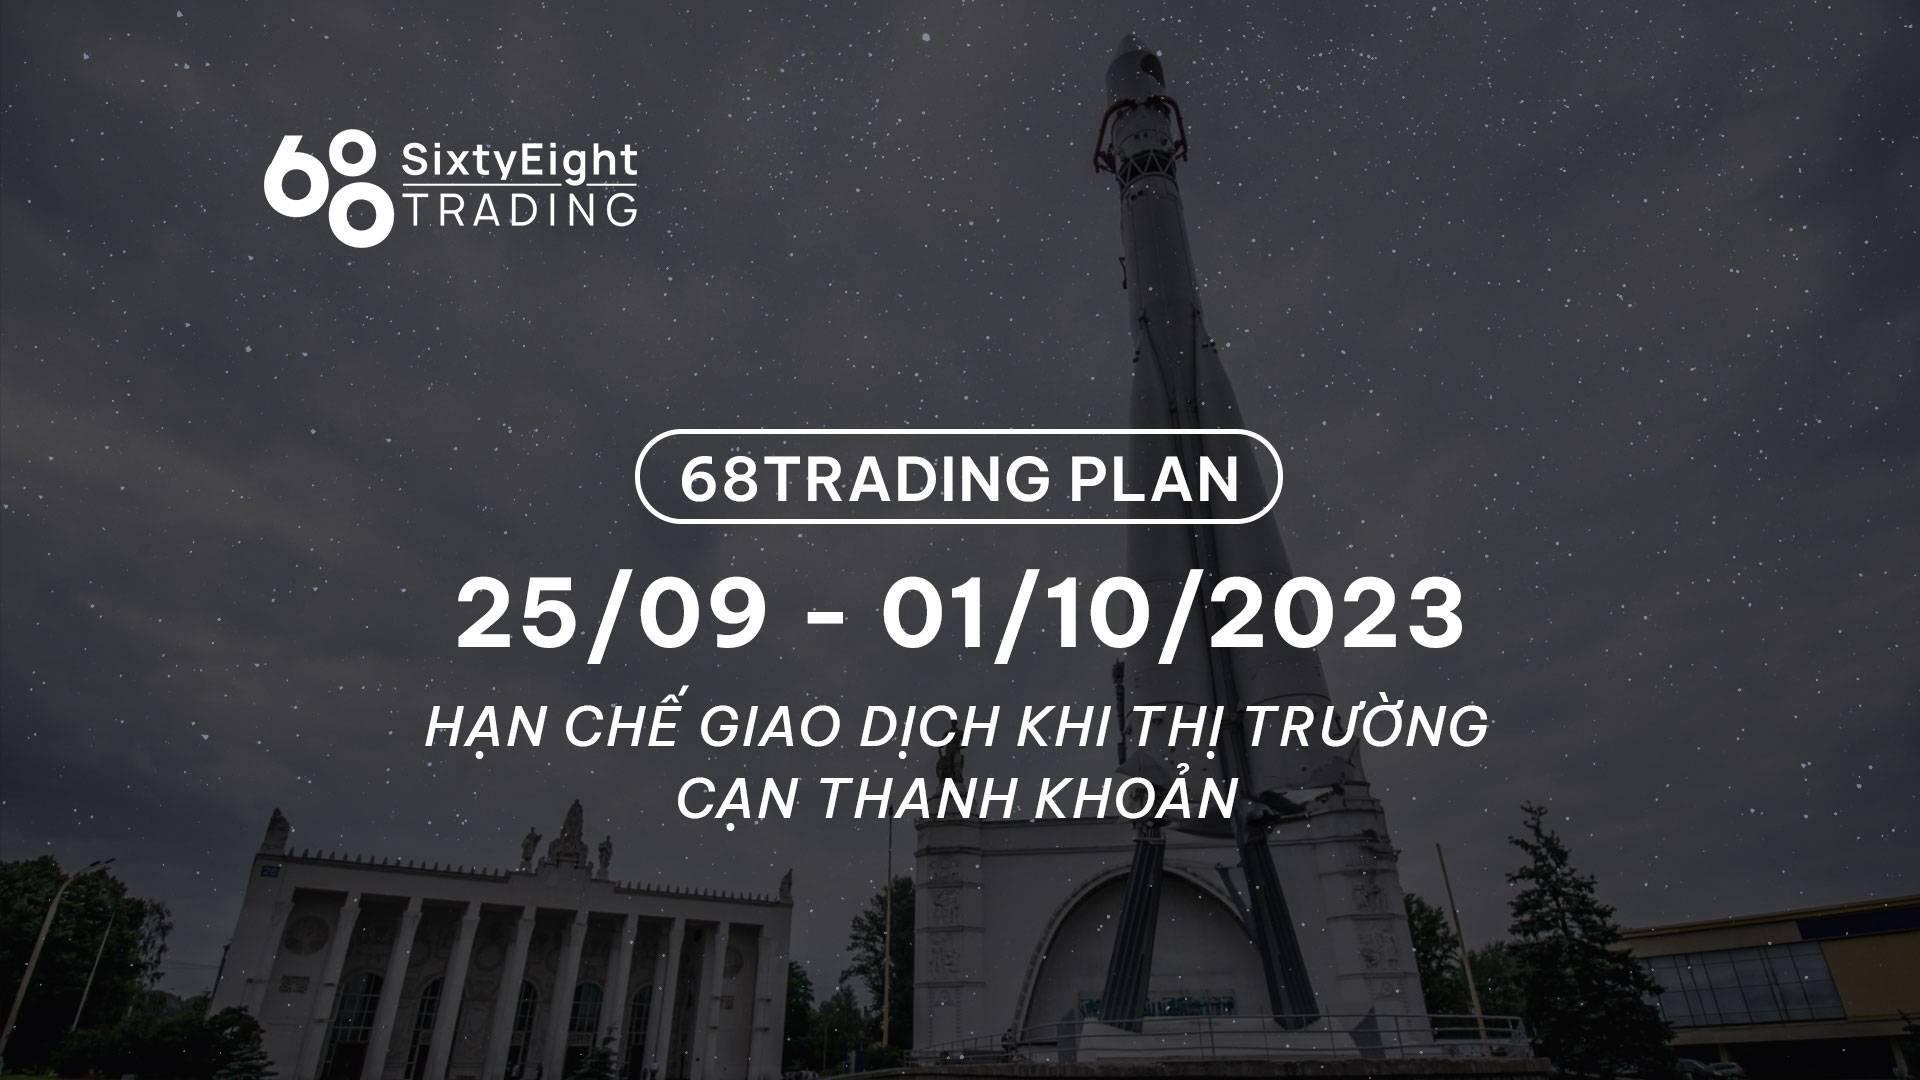 68-trading-plan-2509-01102023-han-che-giao-dich-khi-thi-truong-can-thanh-khoan